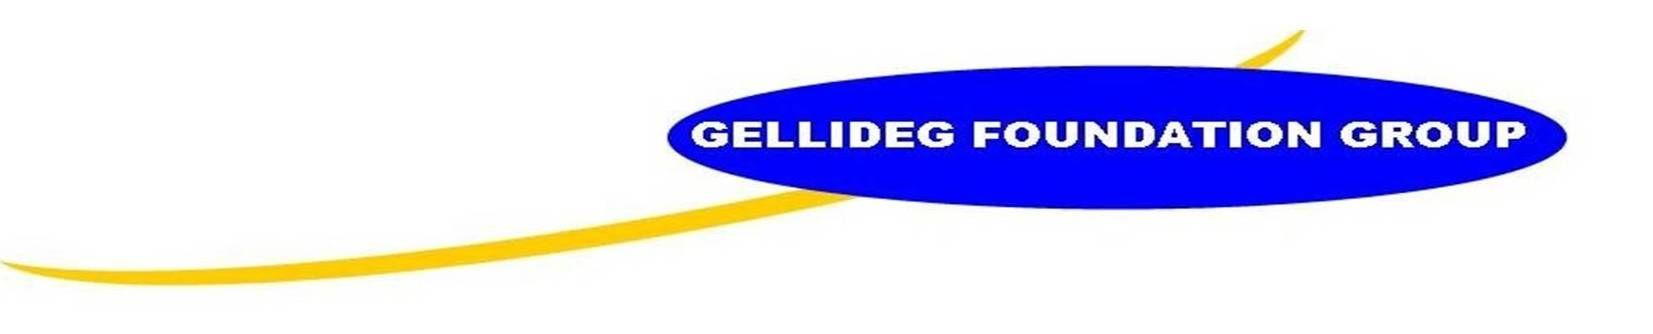 Foundation Group Logo - Gellideg Foundation Group